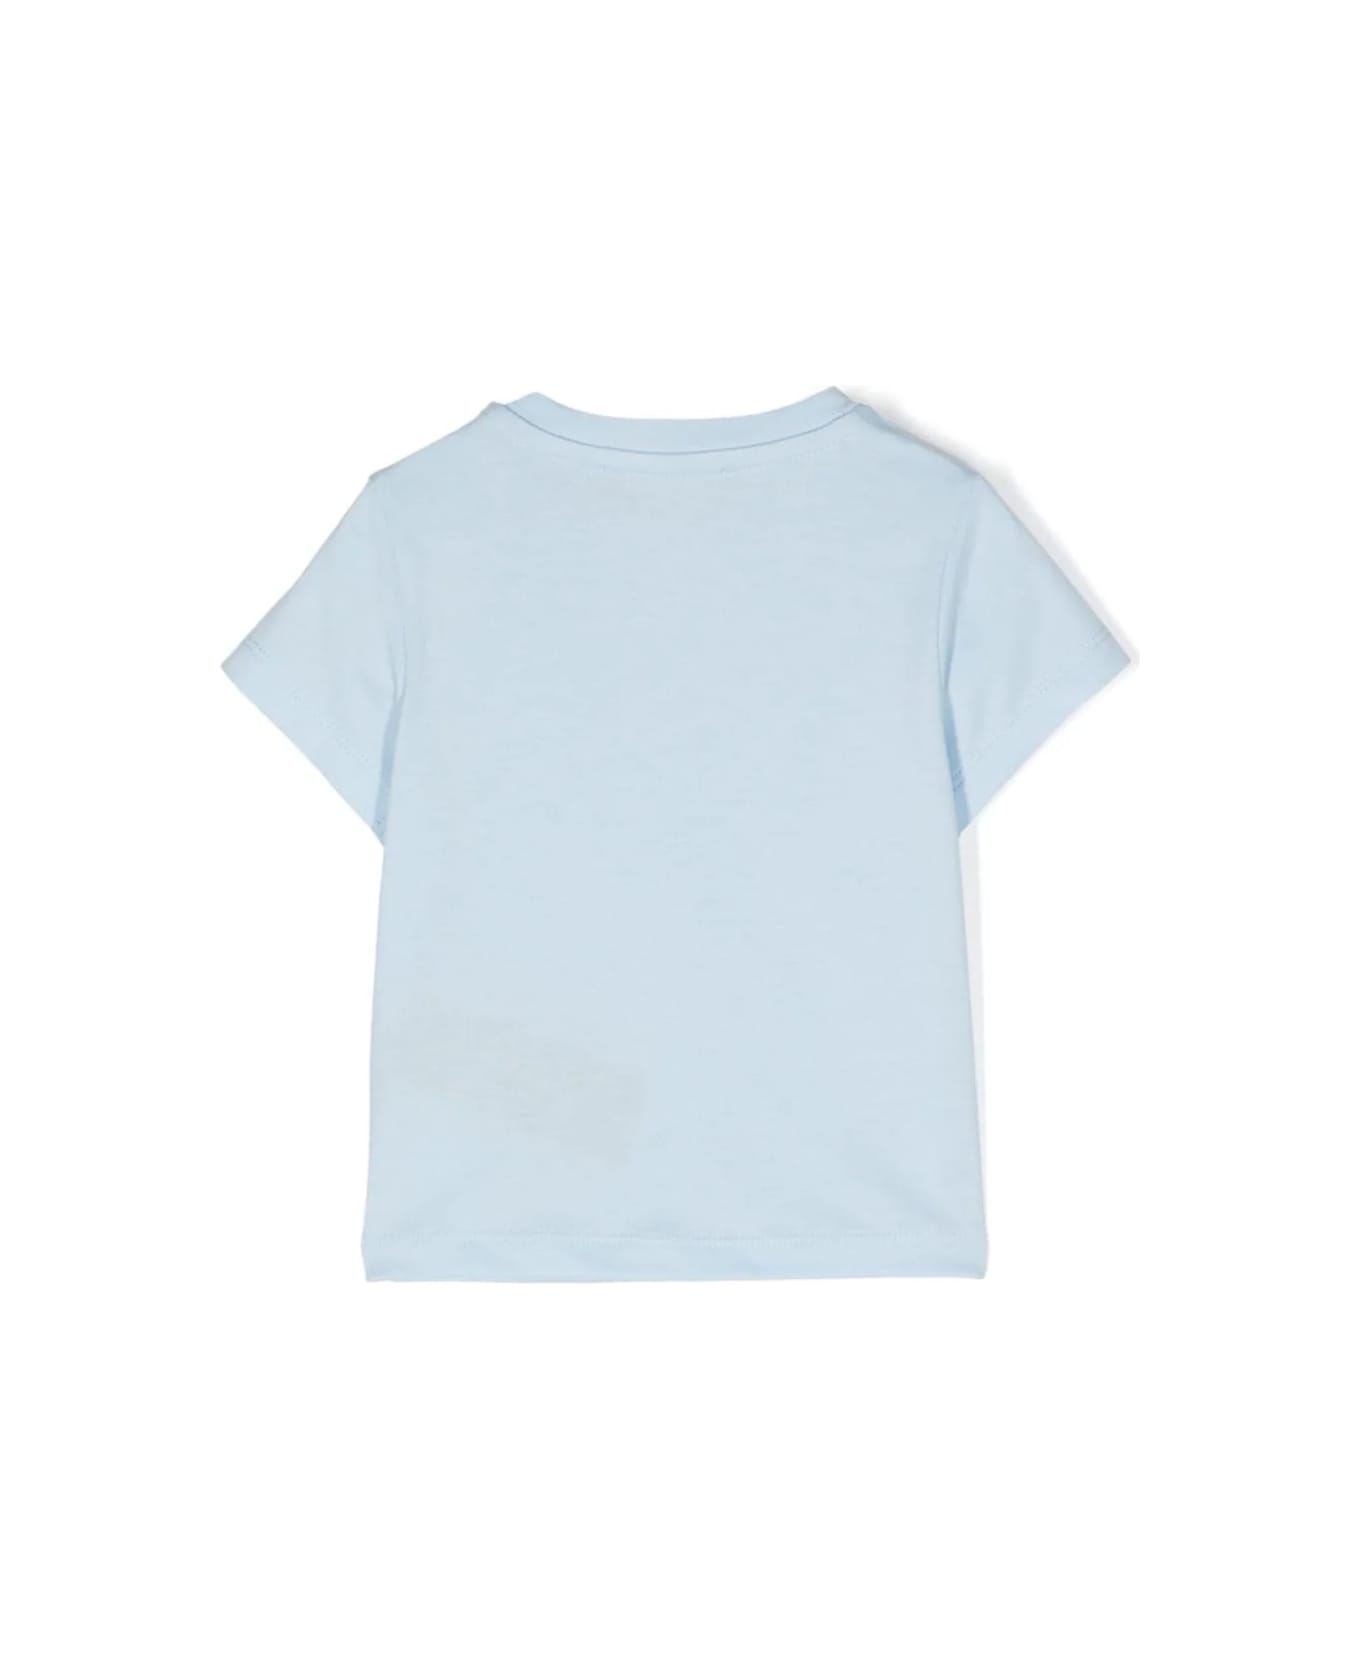 Balmain T-shirt With Print - Light blue